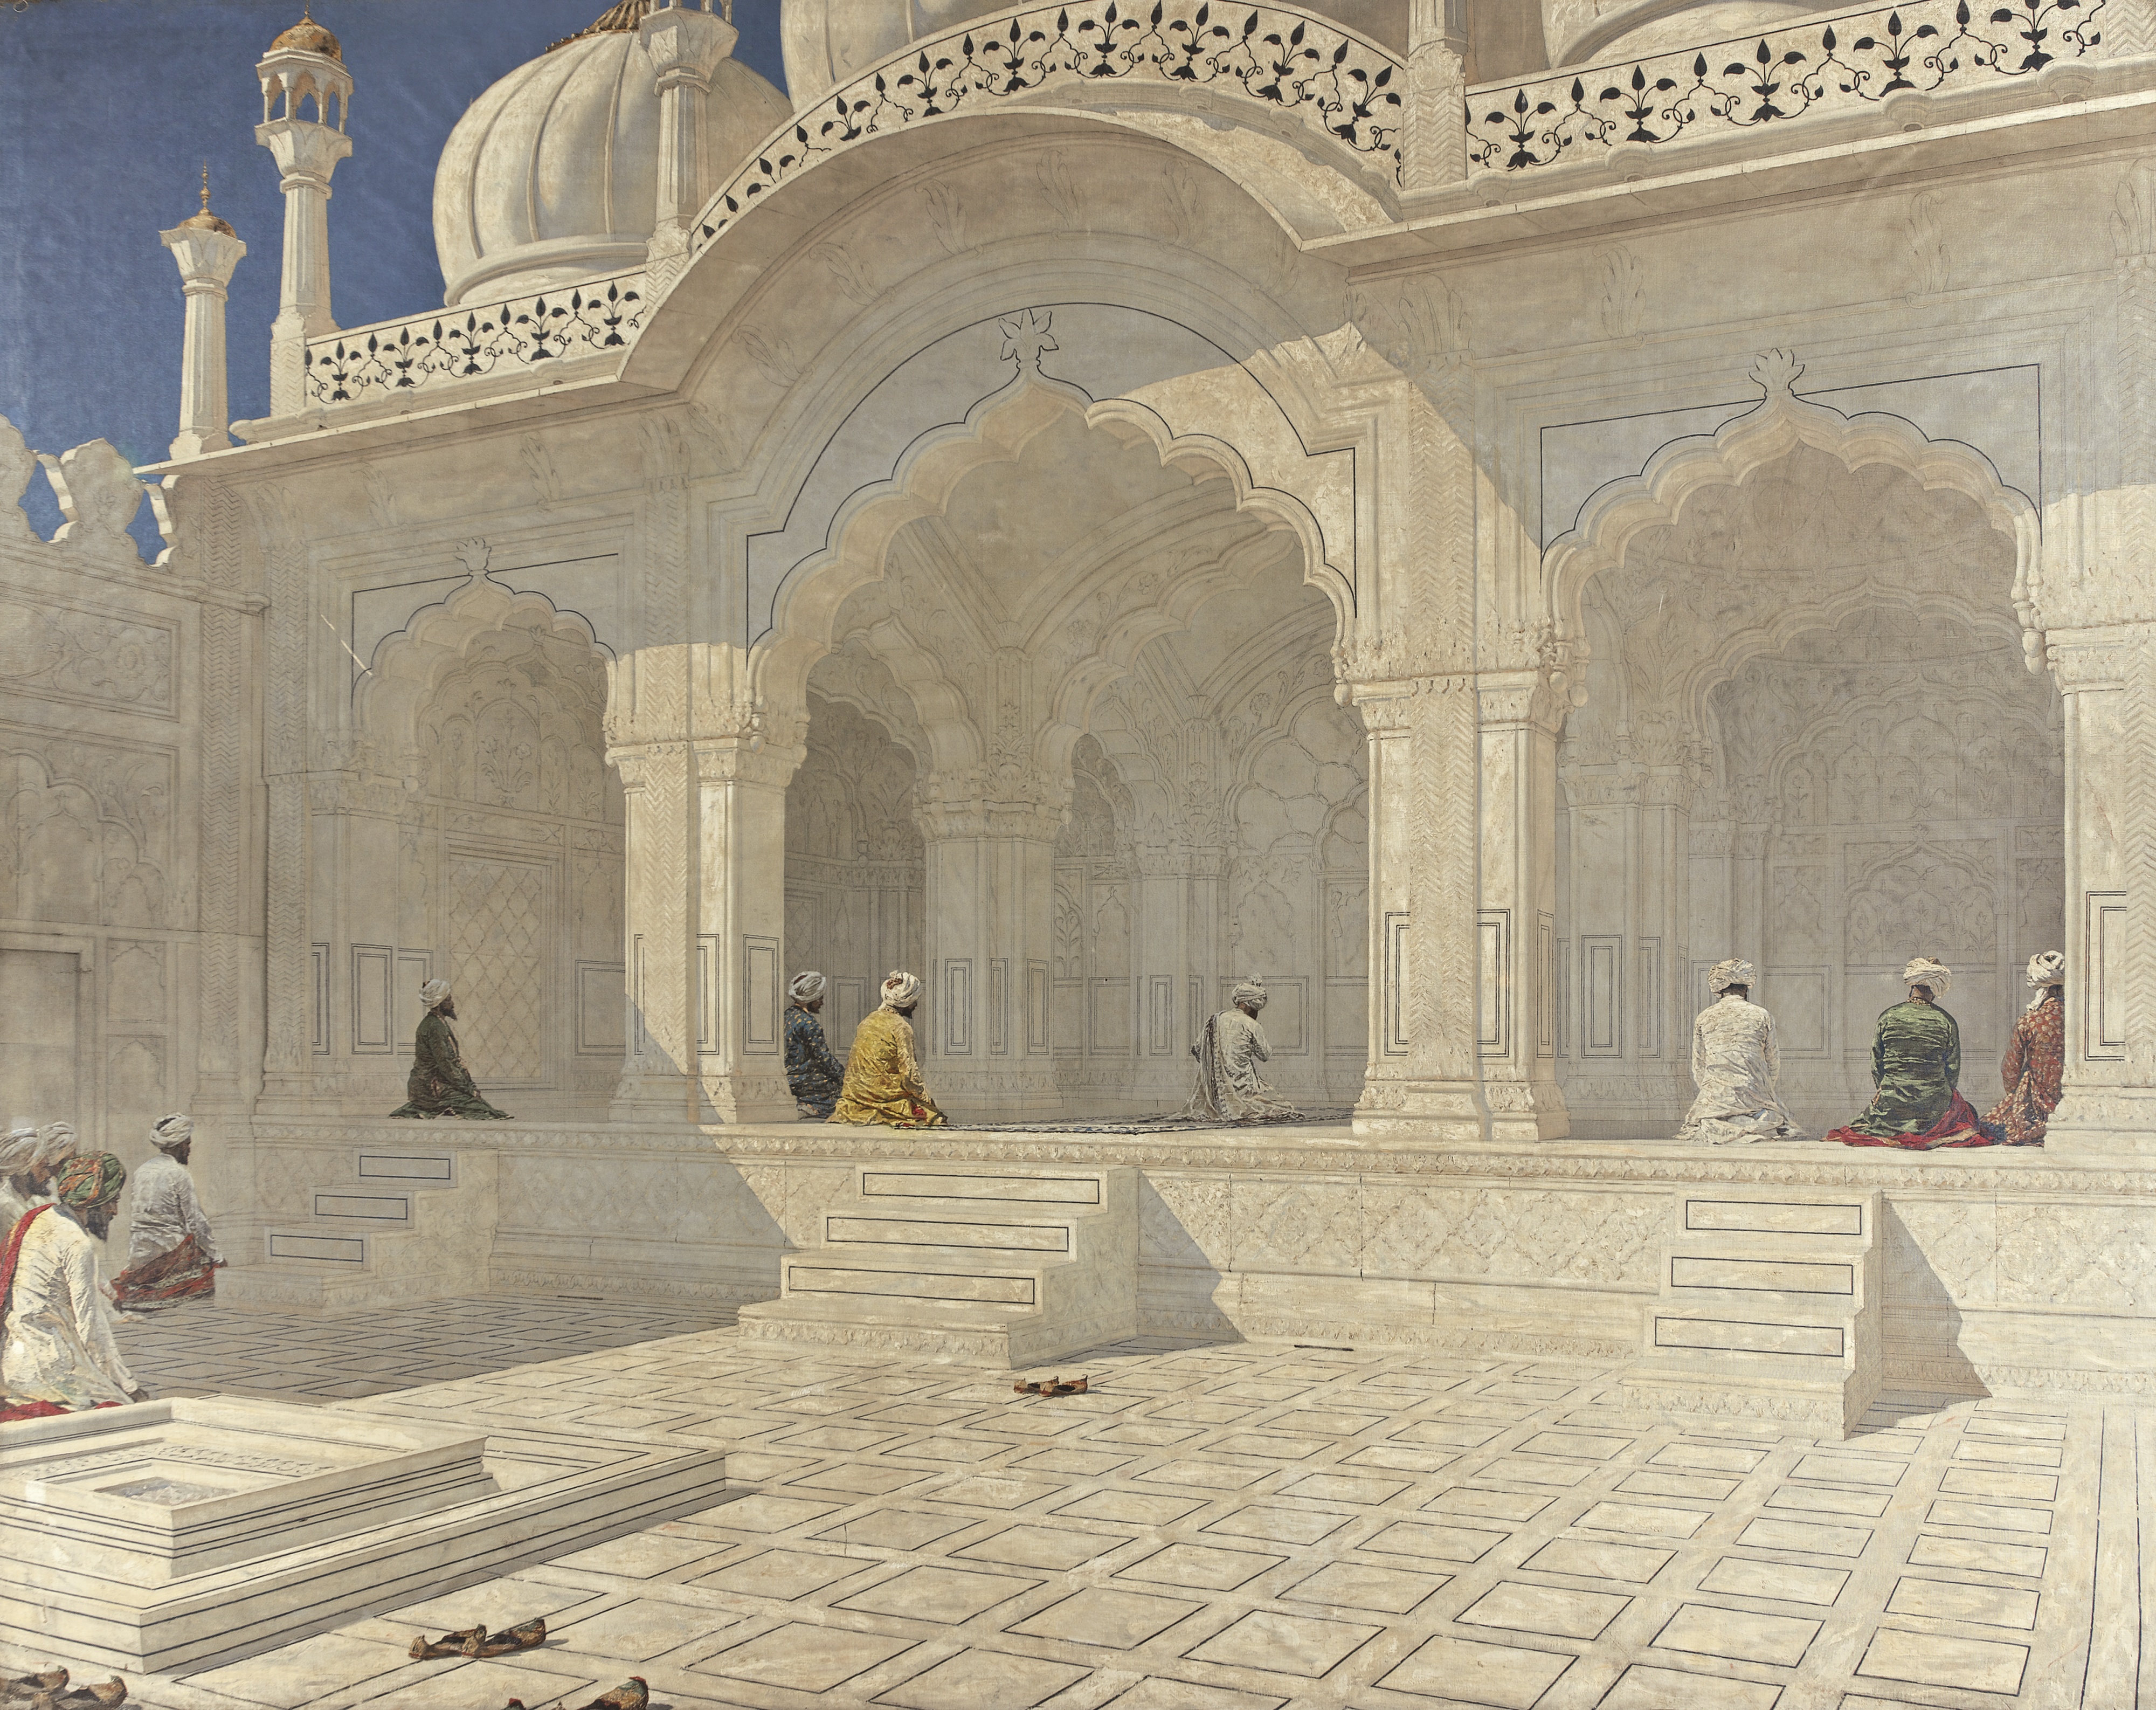 Pearl Mosque at Delhi by Vasily Vereshchagin - 1876-79 - 395 x 500 cm Museum of Fine Arts Boston